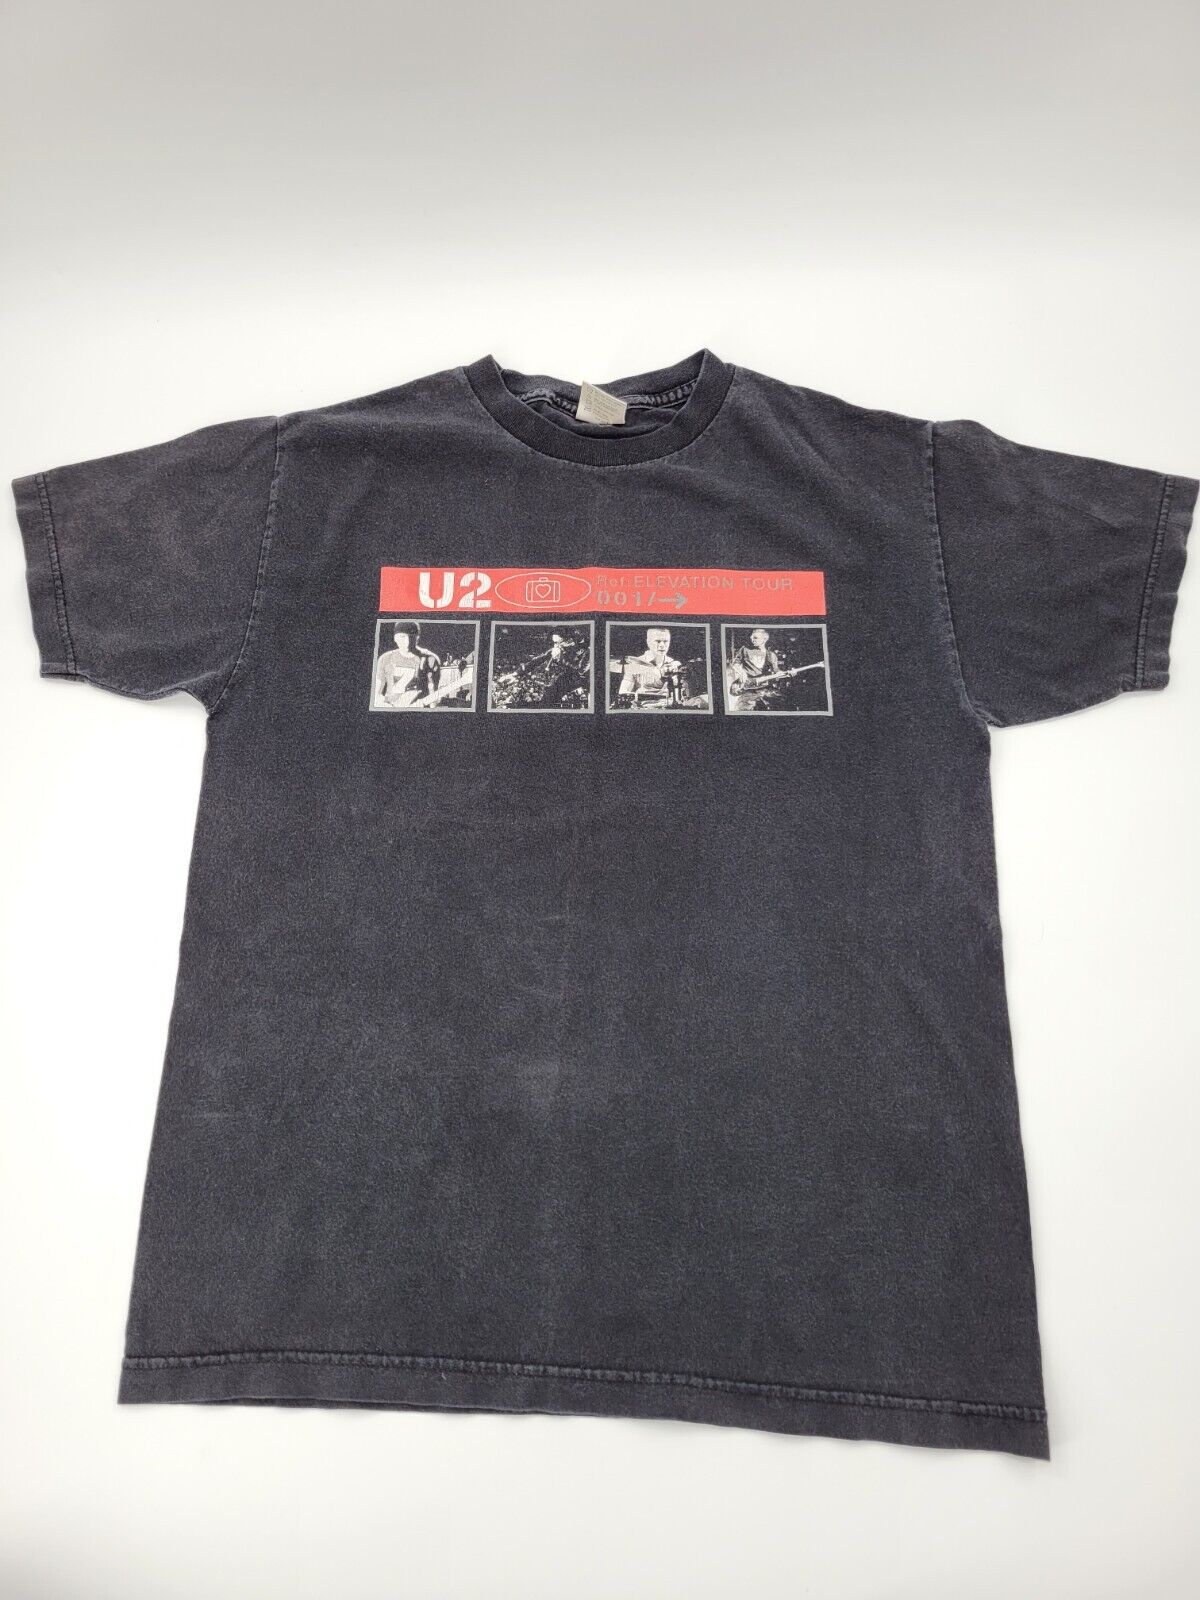 U2 Elevation Tour 2001 Concert Tour T-shirt Medium Murina Cotton Black